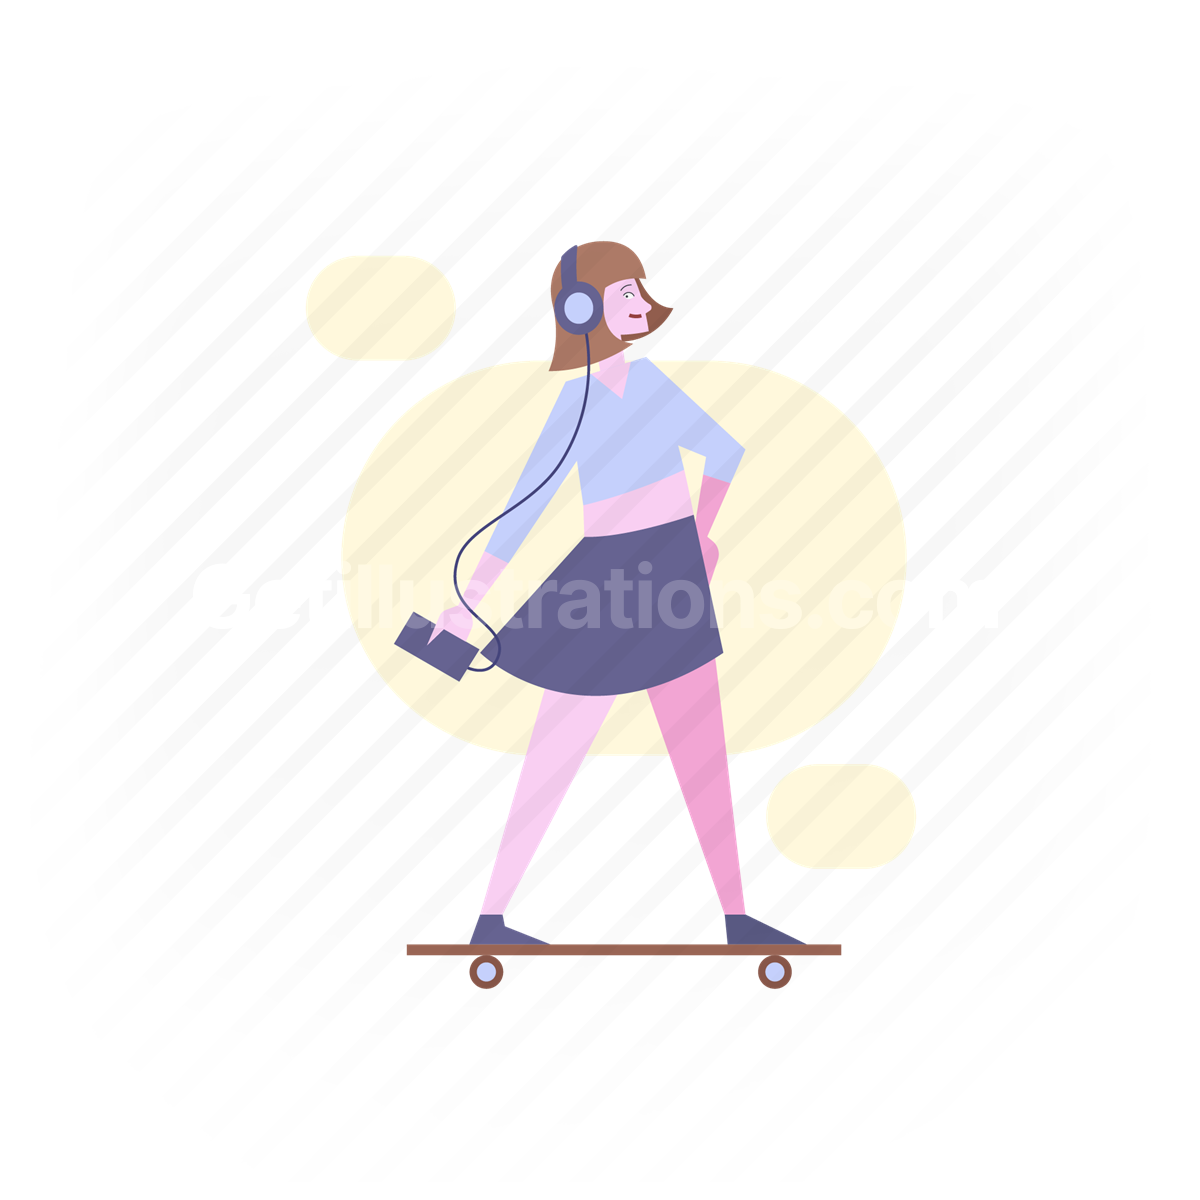 music, sound, skating, skateboard, woman, girl